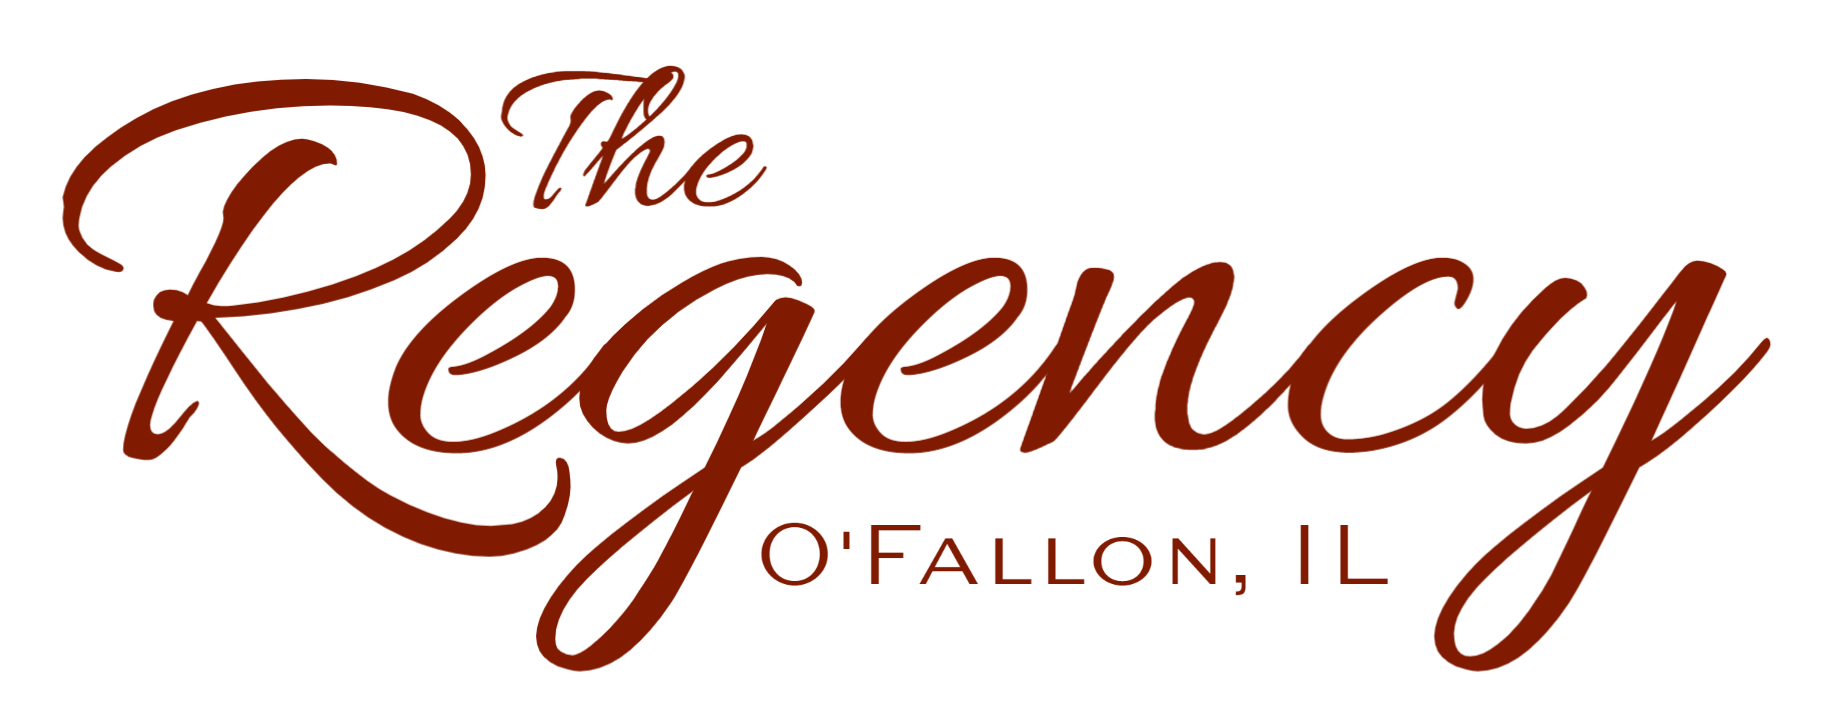 The Regency O'Fallon Logo